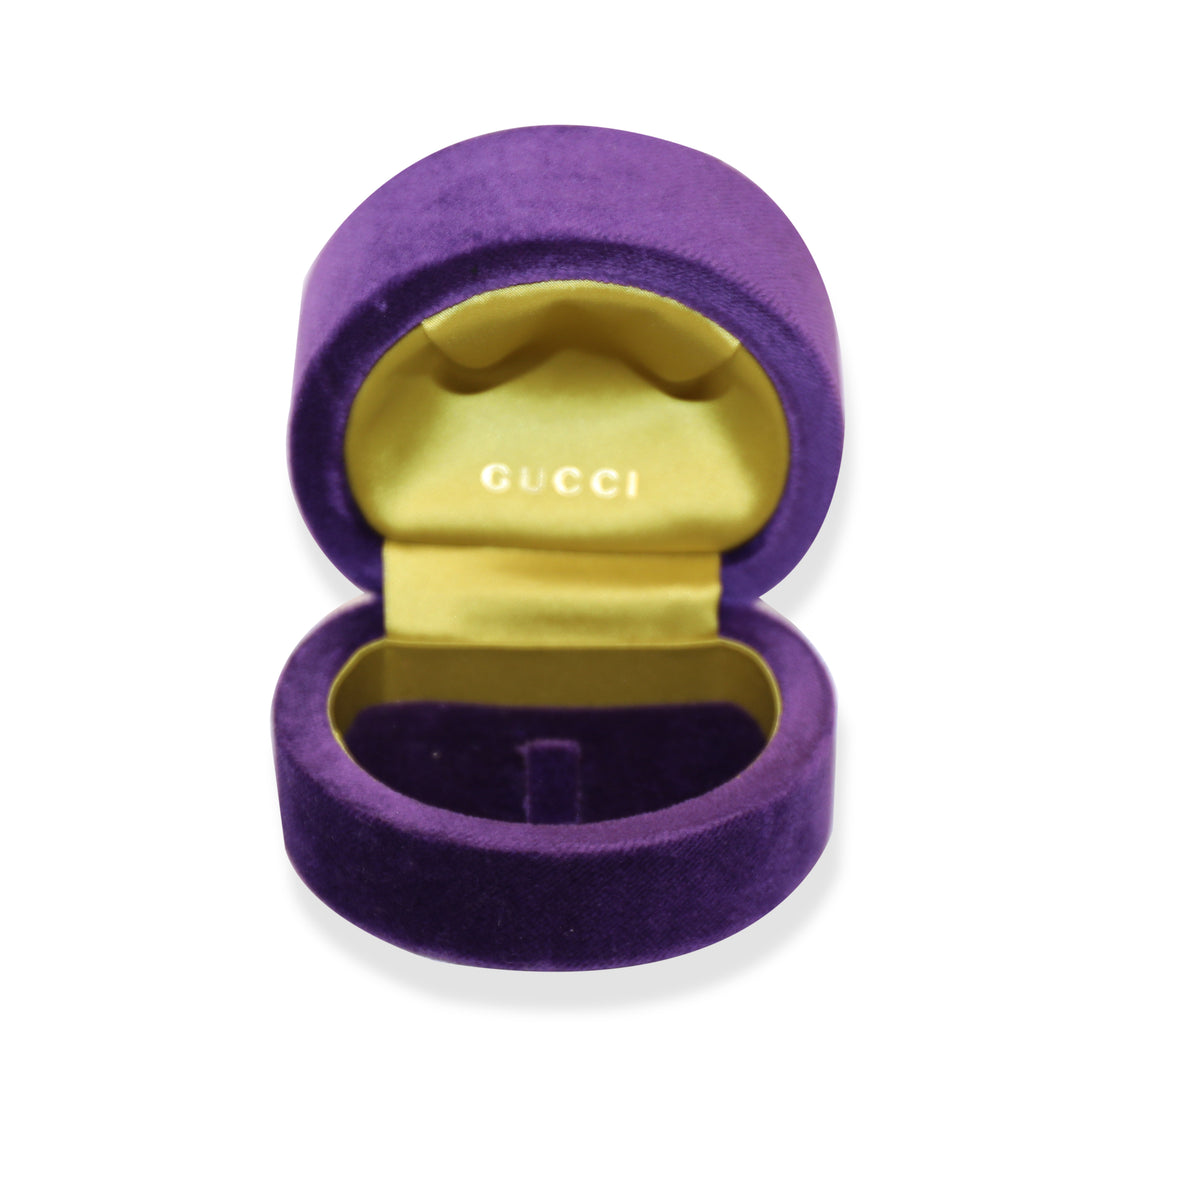 Gucci Flora Sapphire Diamond Ring in 18K Rose Gold 0.01 CTW